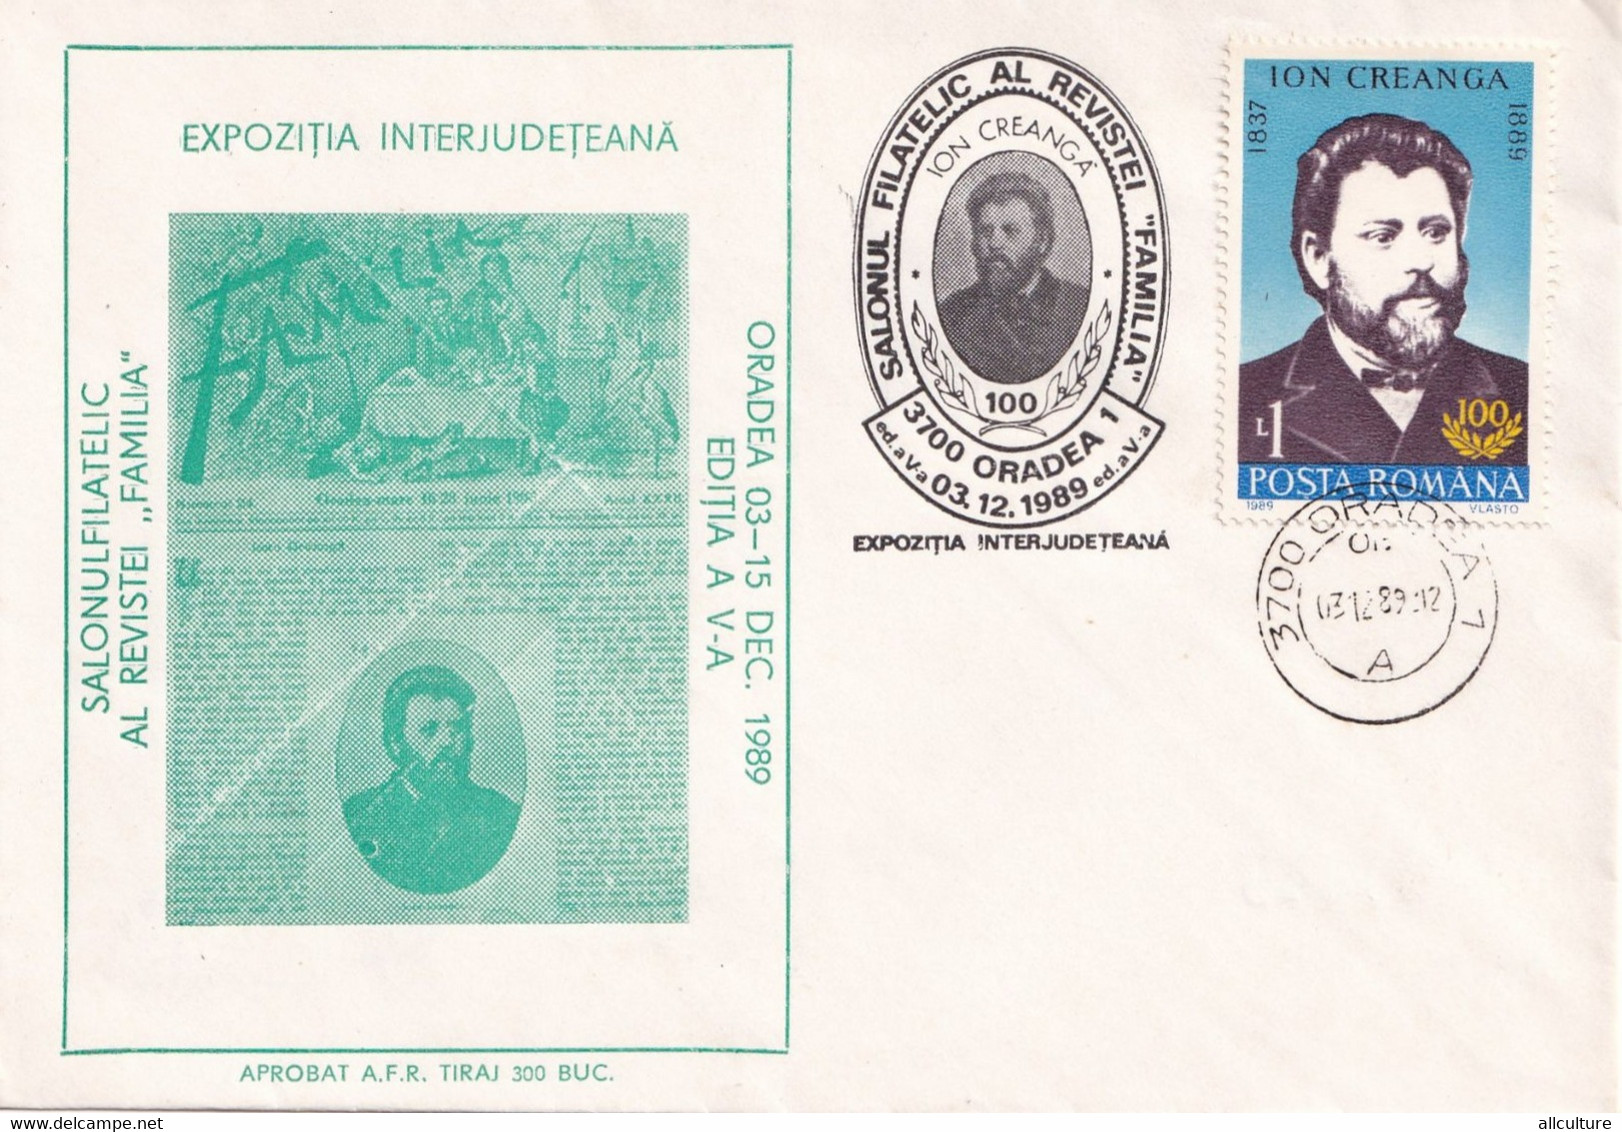 A3017 - Ion Creanga, Scriitor Roman, Expozitia Interjudeteana Oradea 1989 Republica Socialista Romania Posta Romana - Cartas & Documentos